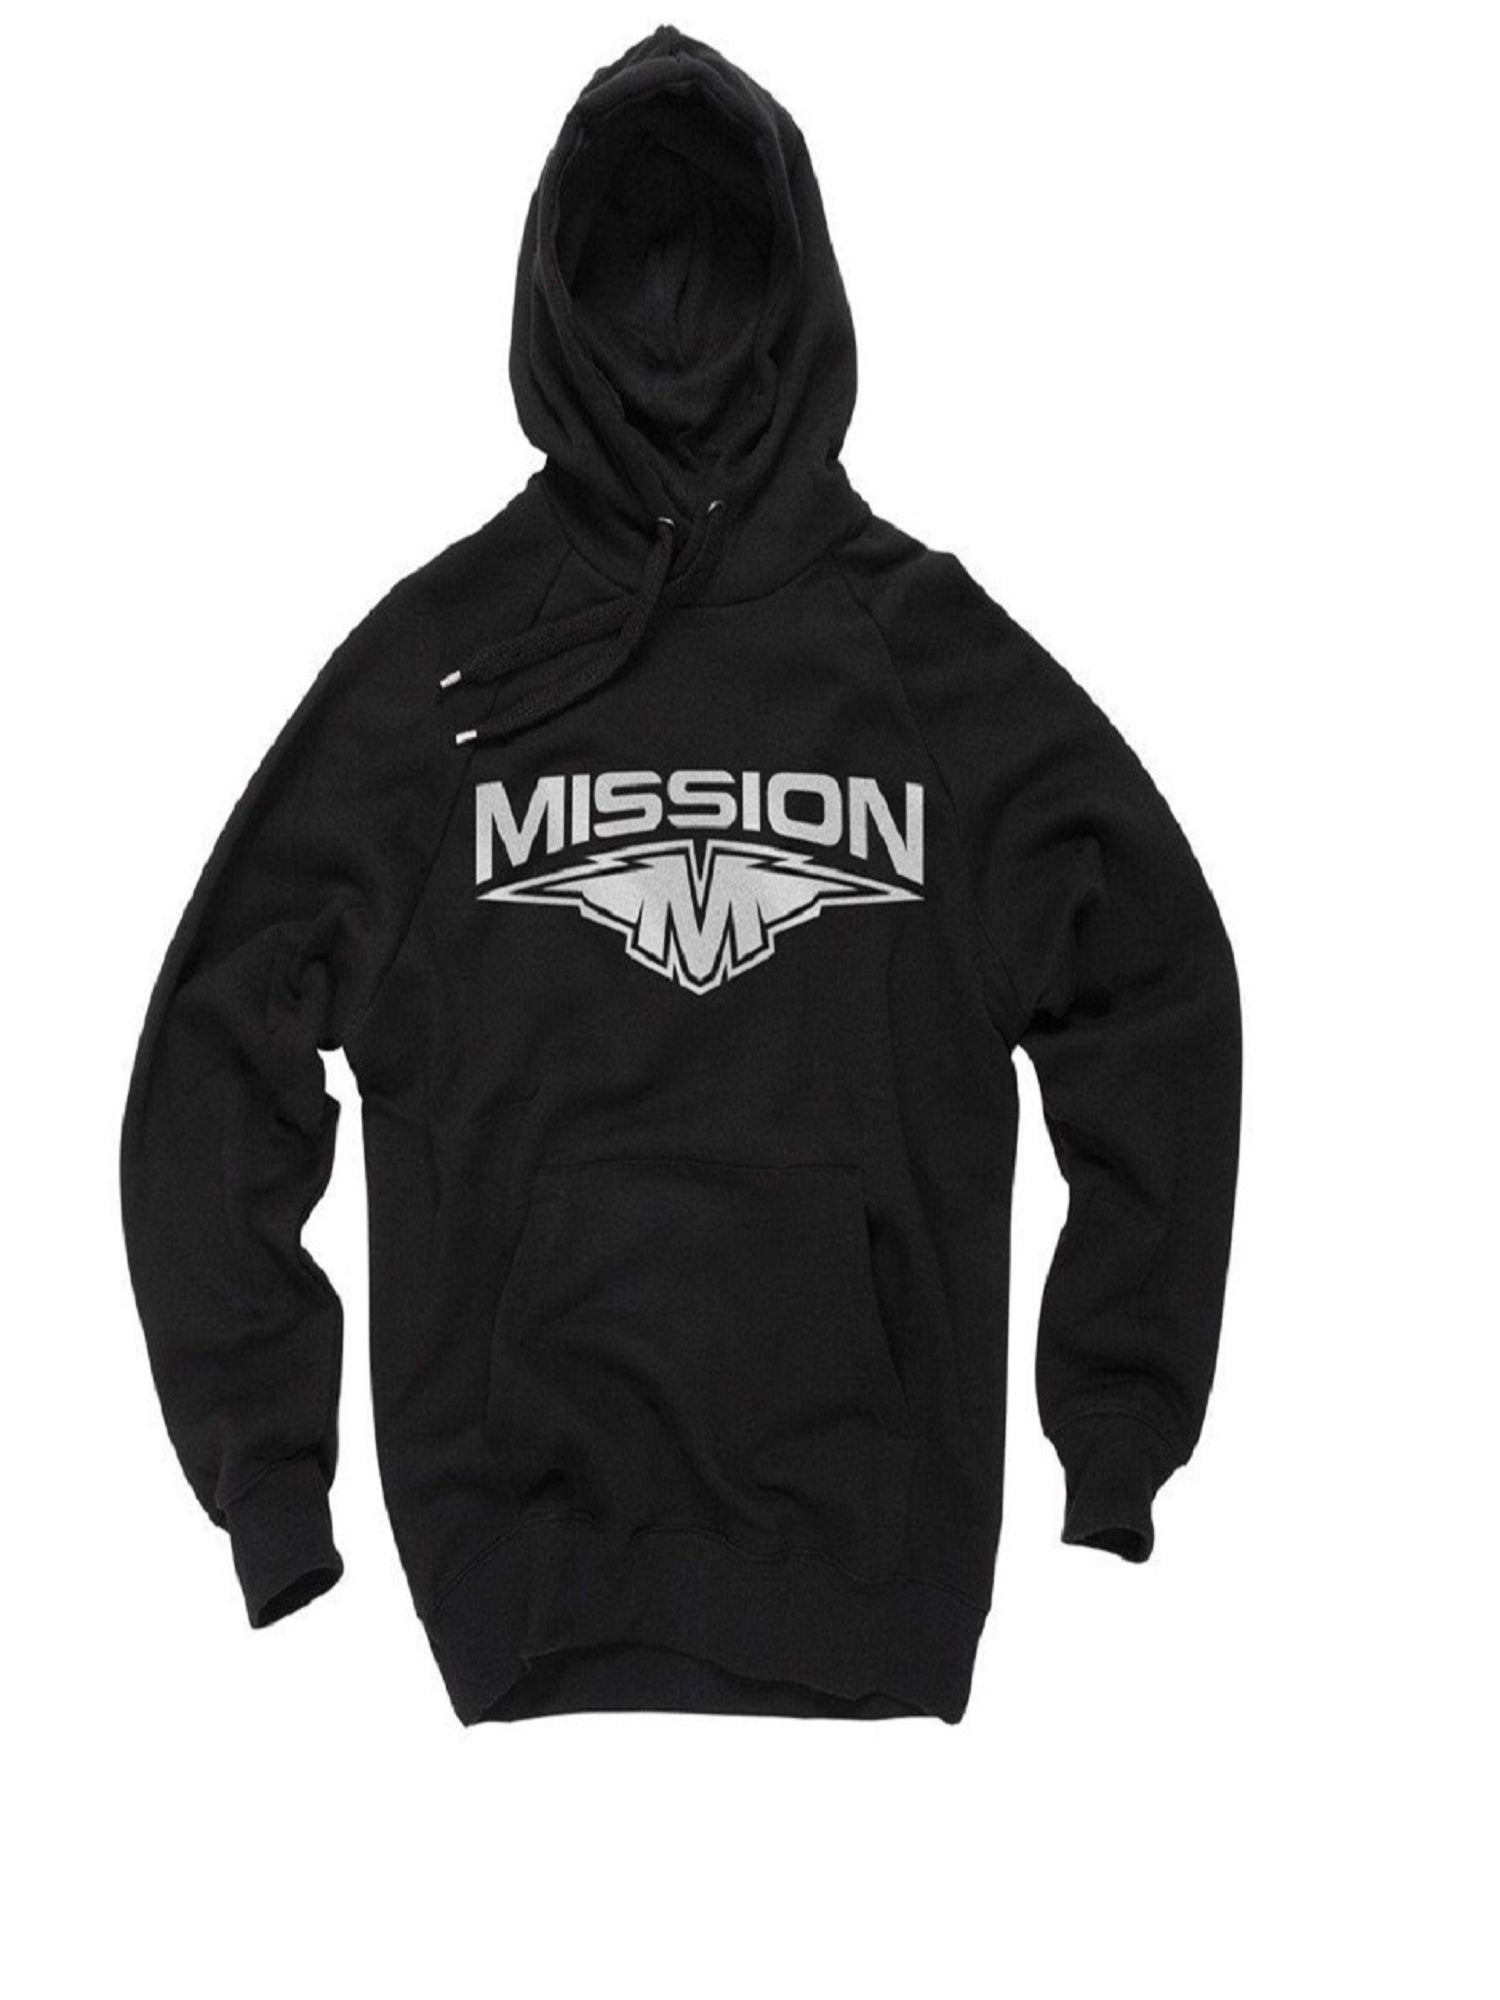 Mission Corporate Senior Black Pullover Hoody, XXL